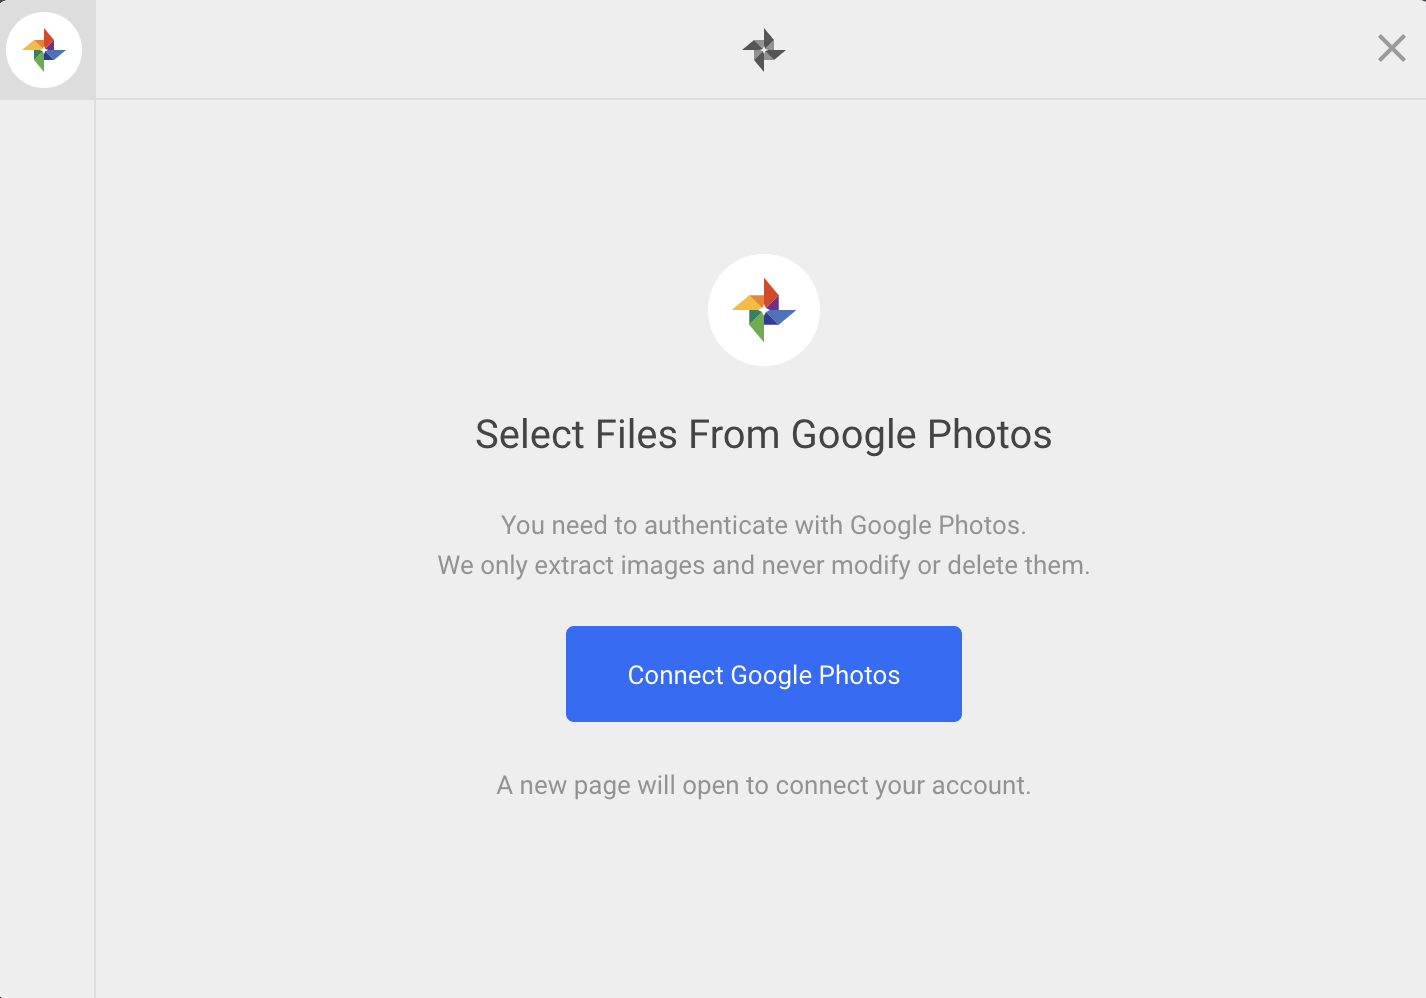 Upload from Google Photos API